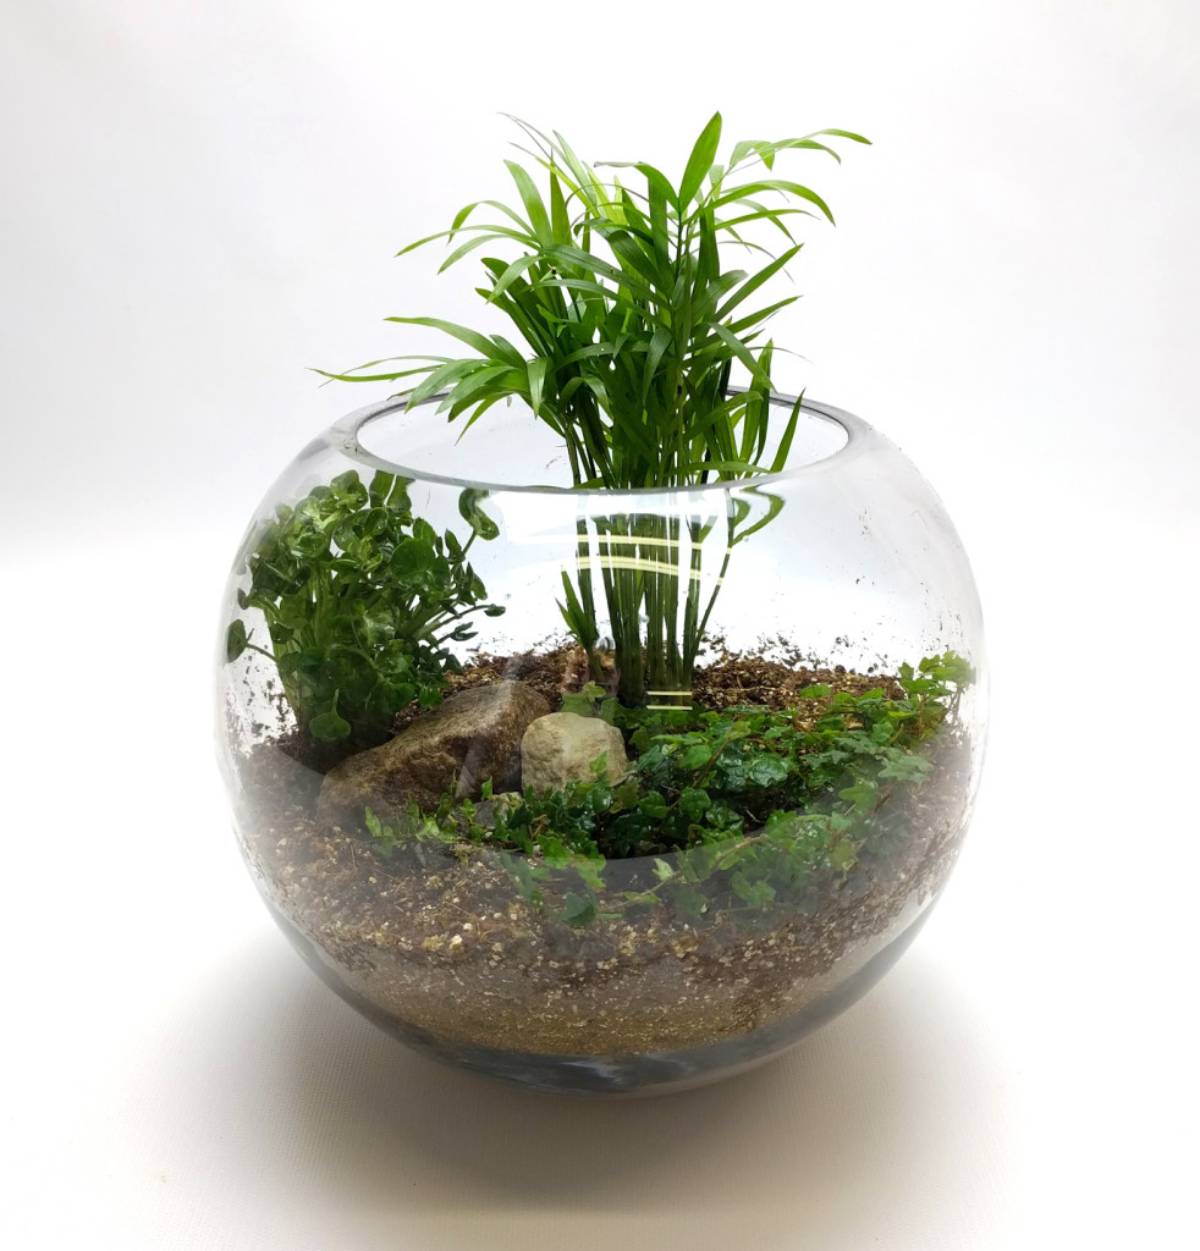 Create a DIY custom plant terrarium! Watch our simple How-To Video